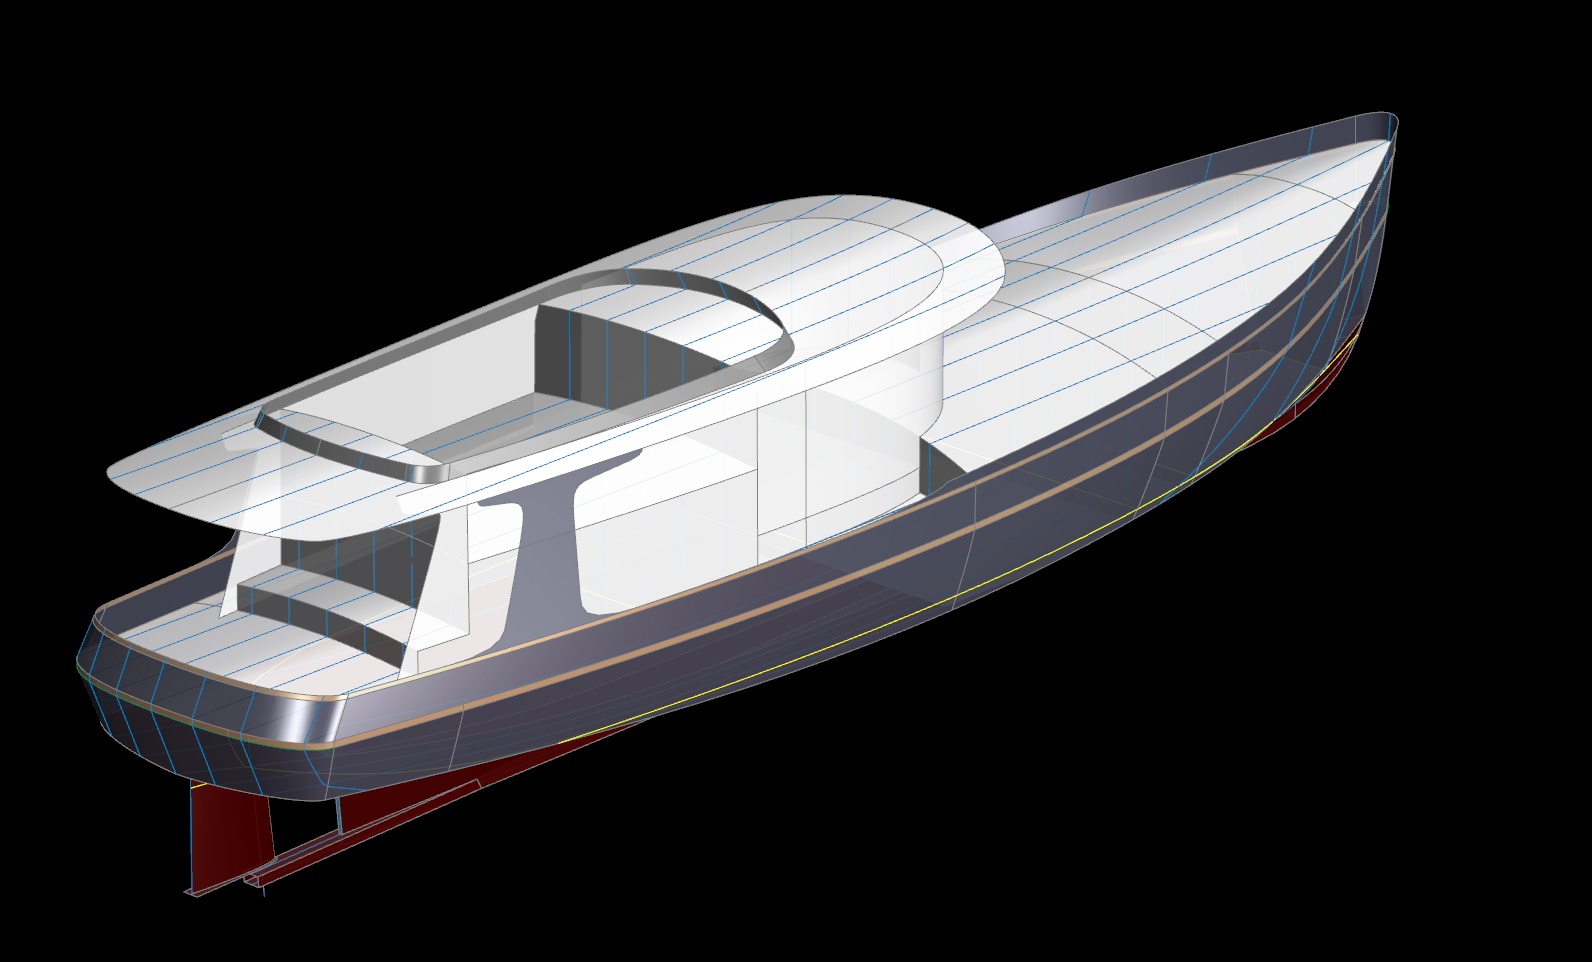 70' Vagrant trawler Yacht - Kasten Marine Design, Inc.